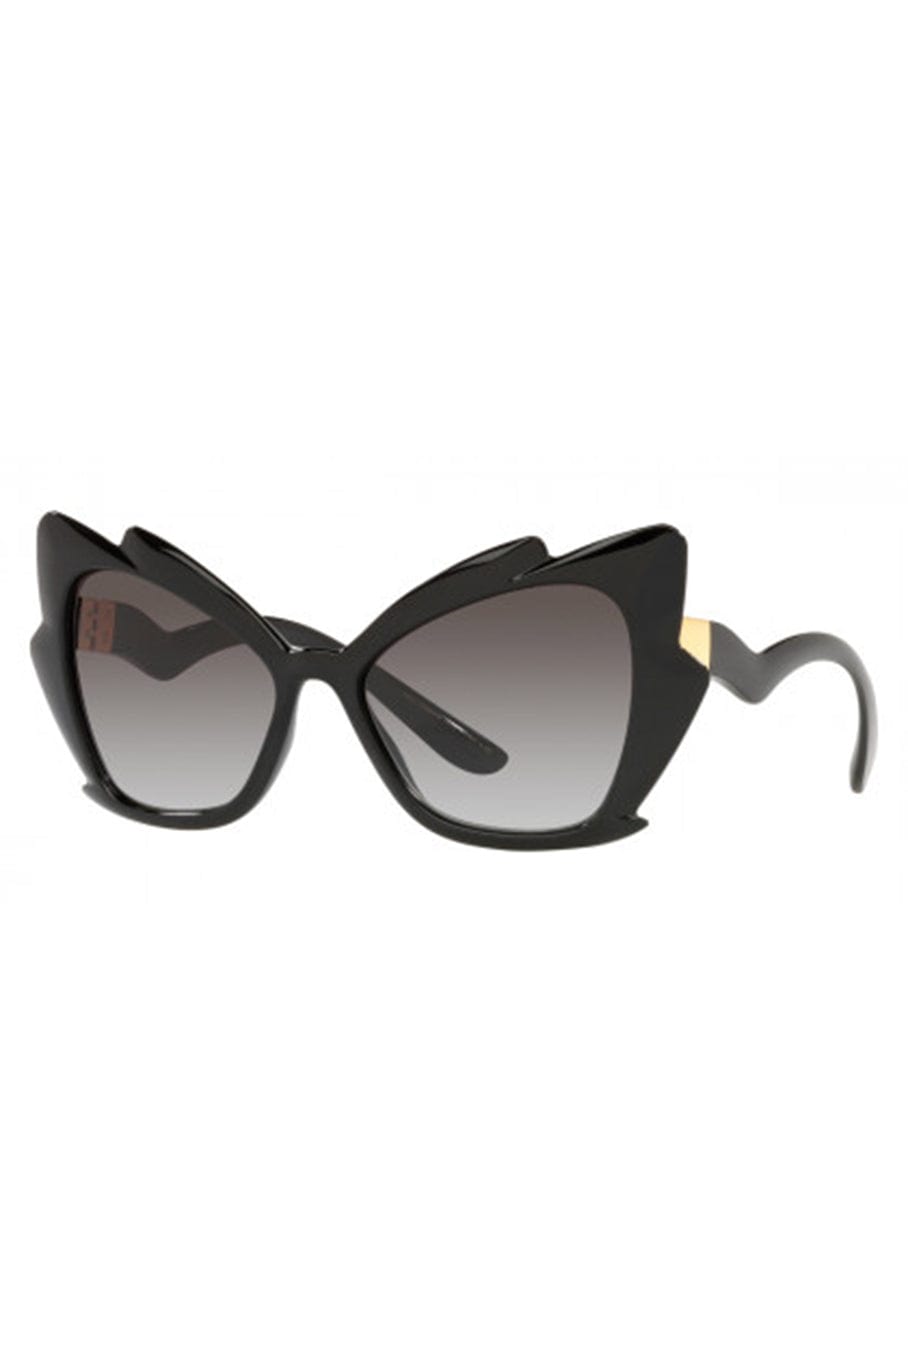 DOLCE & GABBANA-Cat Eye Sunglasses-BLACK/LIGHT GREY